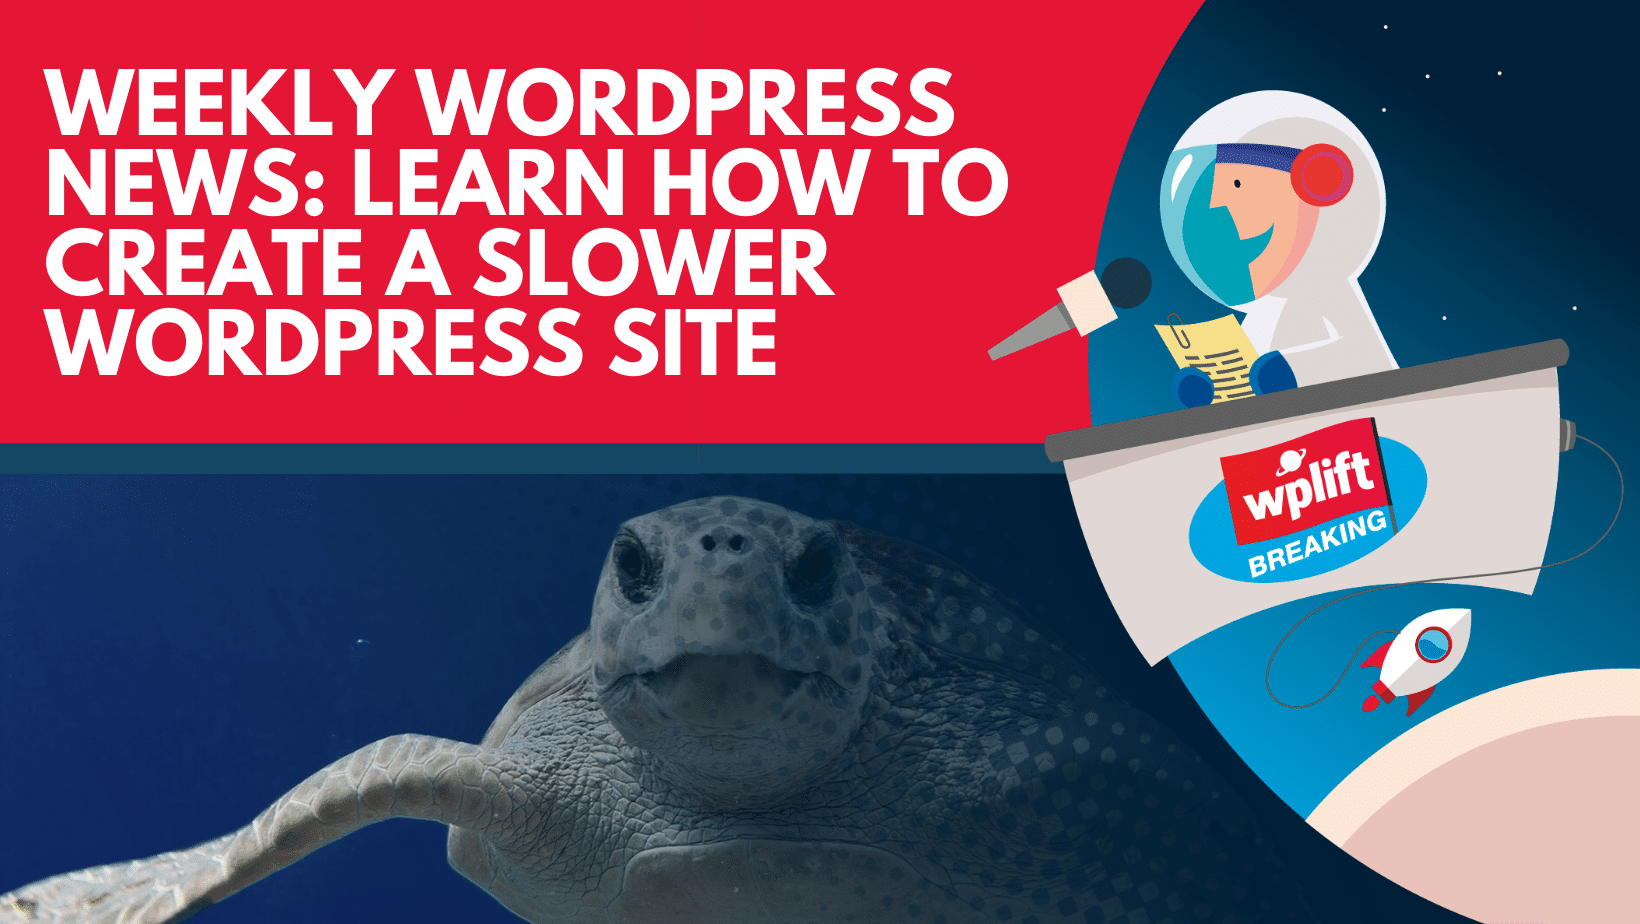 Weekly WordPress News: Learn How to Create a Slower WordPress Site